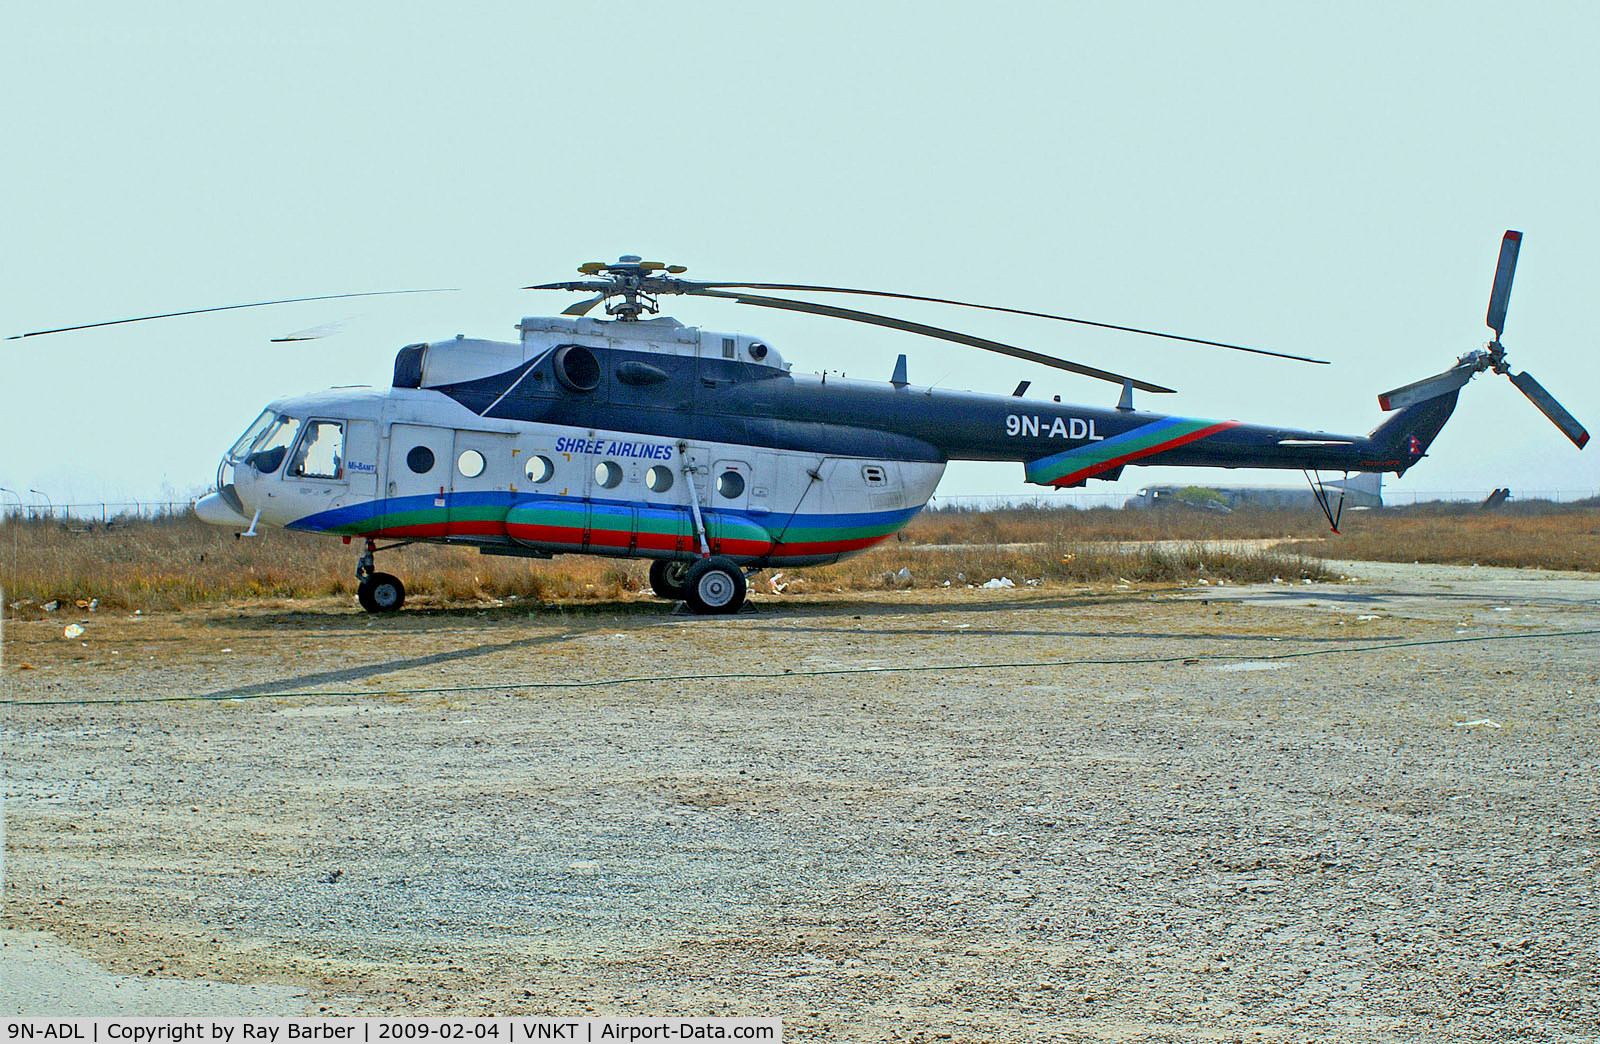 9N-ADL, 1992 MIL Mi-8AMT C/N 59489605283, 9N-ADL   Mil Mi-8 AMT [59489605283] (Shree Airlines) Kathmandu-Tribhuvan Int'l~9N 04/02/2009